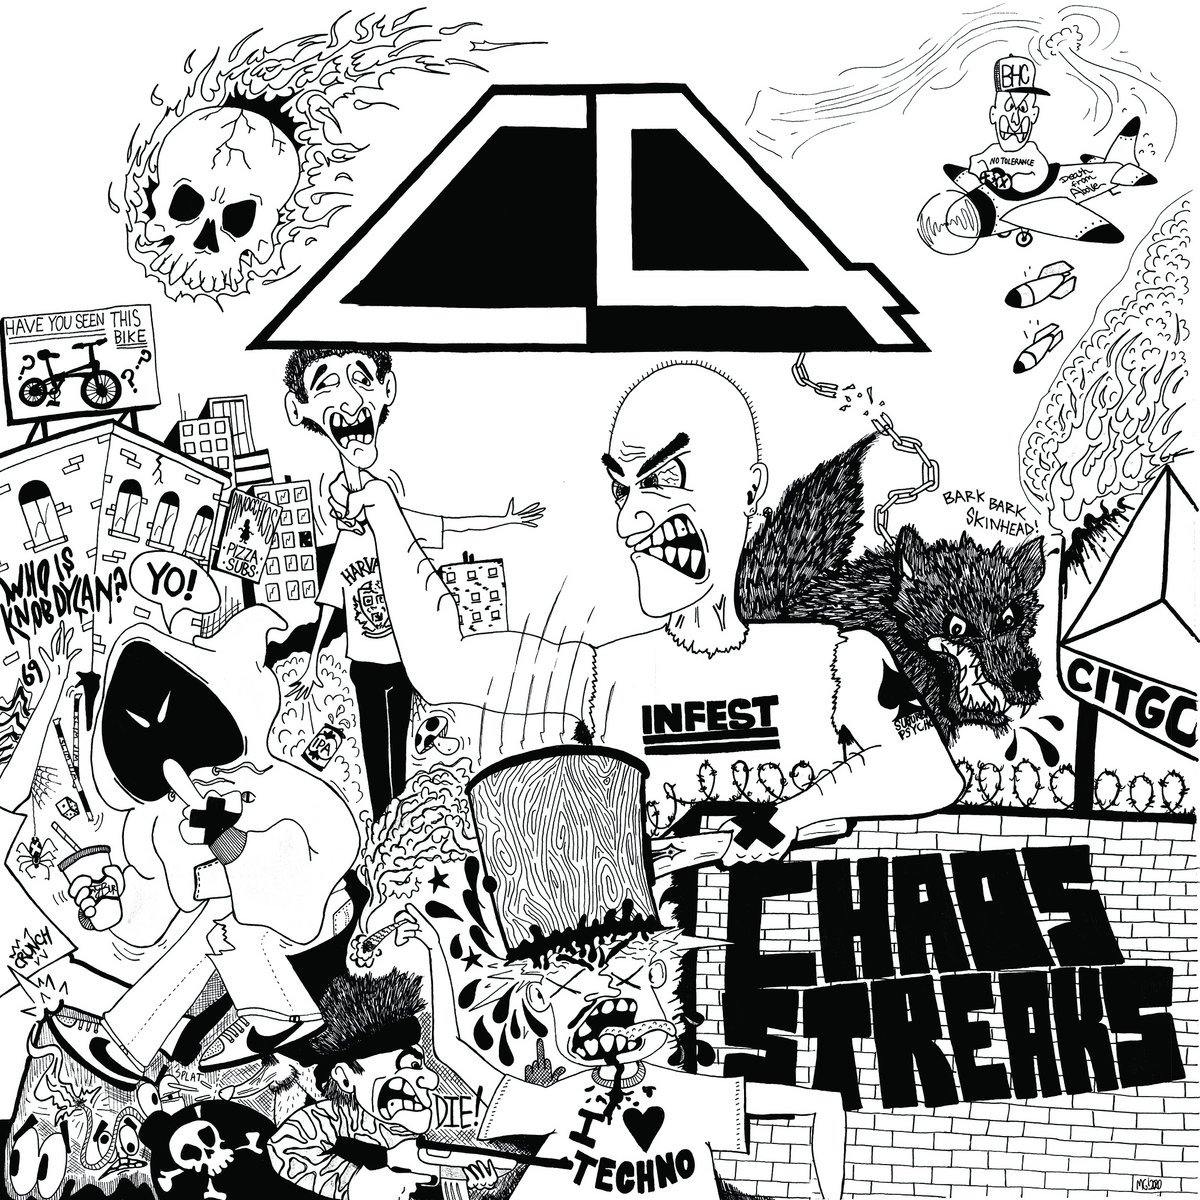 Buy – C4 "Chaos Streaks" 12" – Band & Music Merch – Cold Cuts Merch